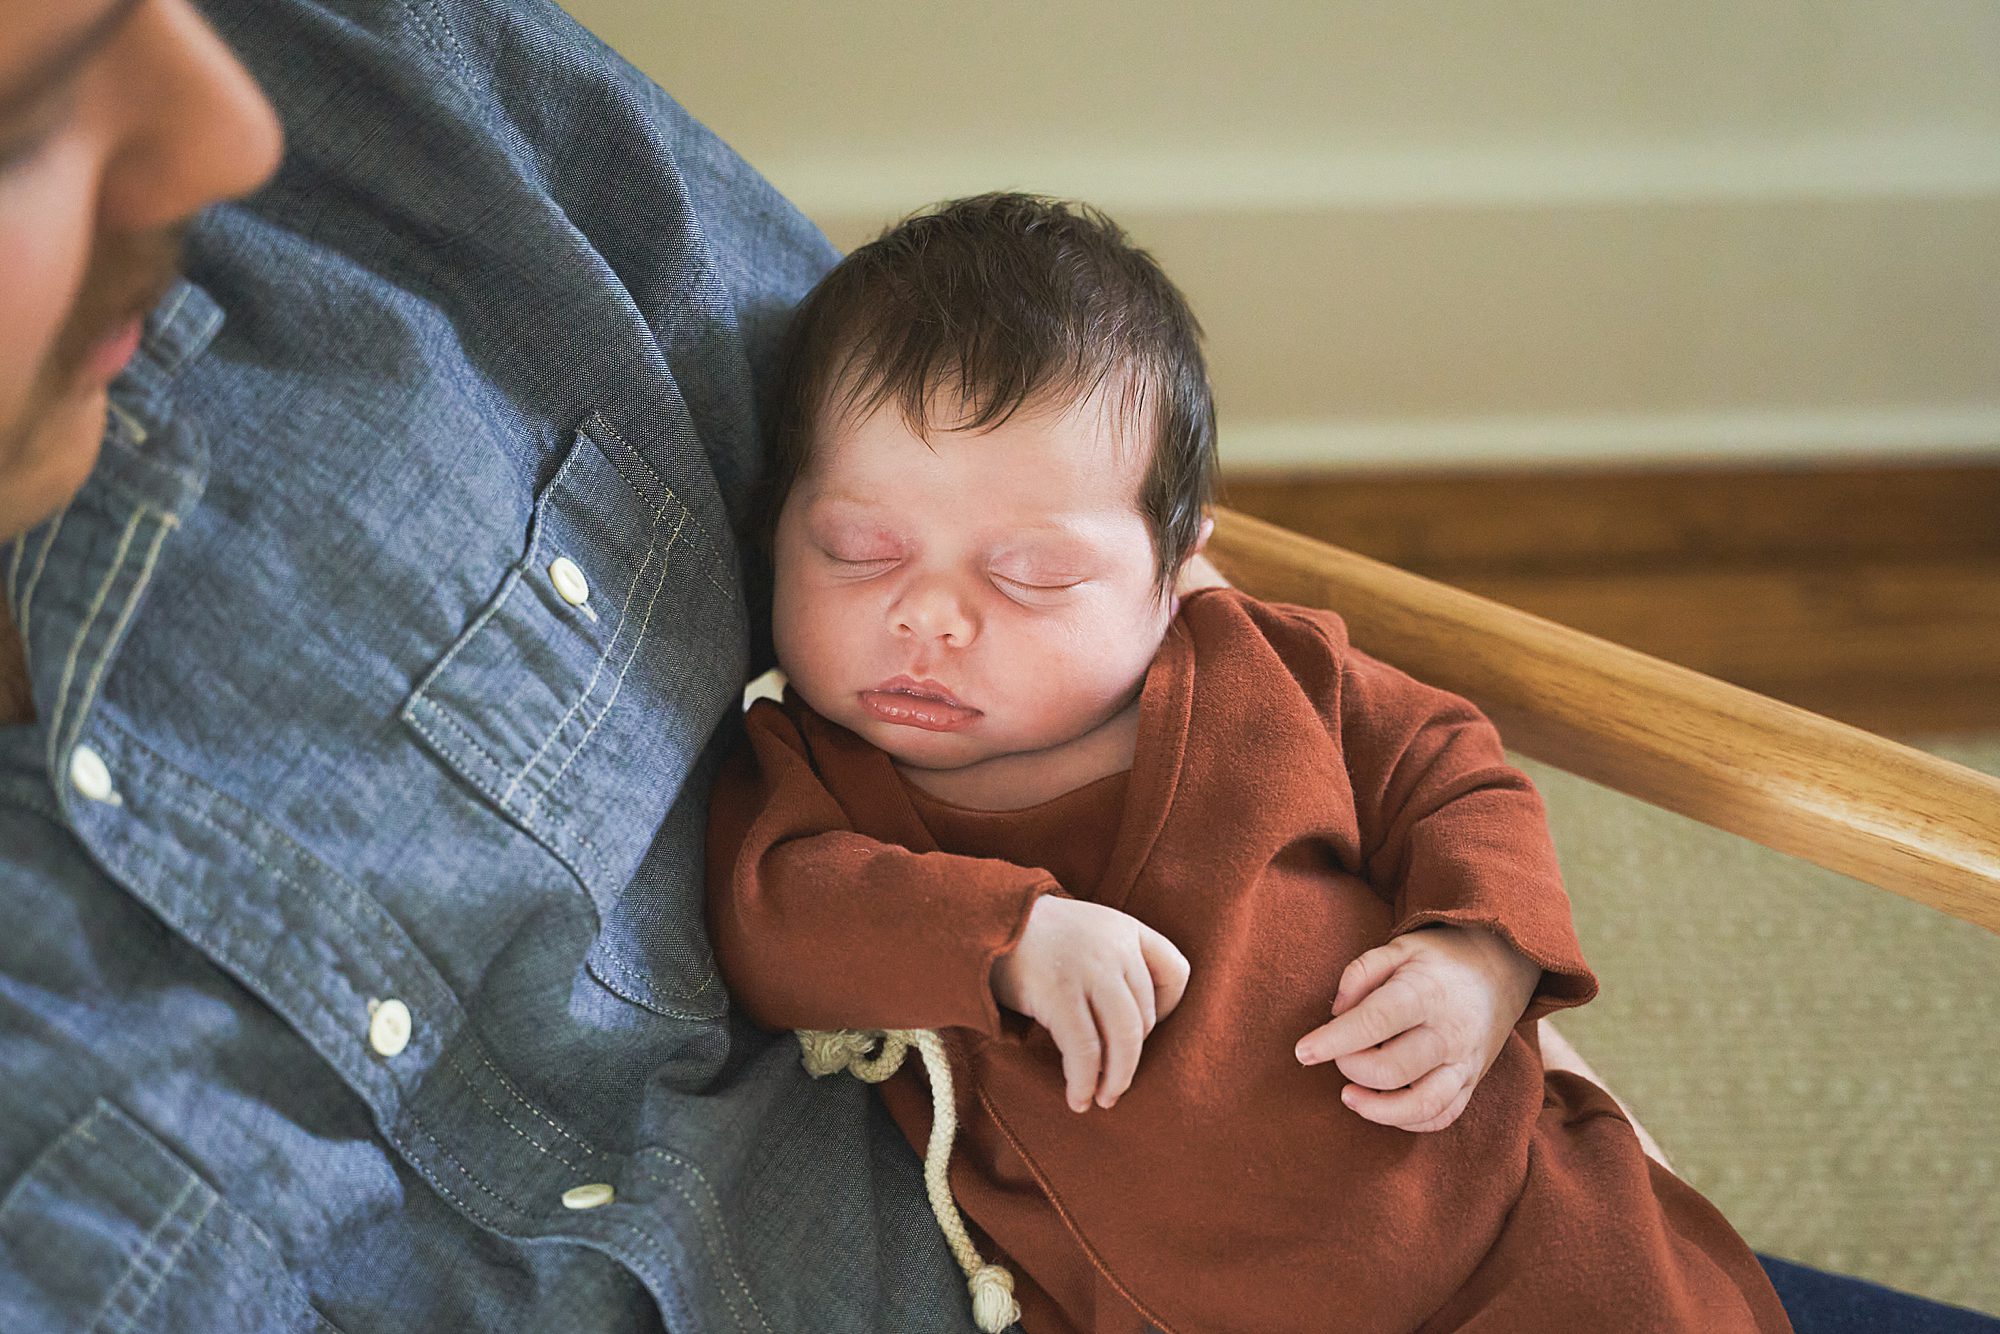 Newborn sleeping peacefully against an adult's chest.